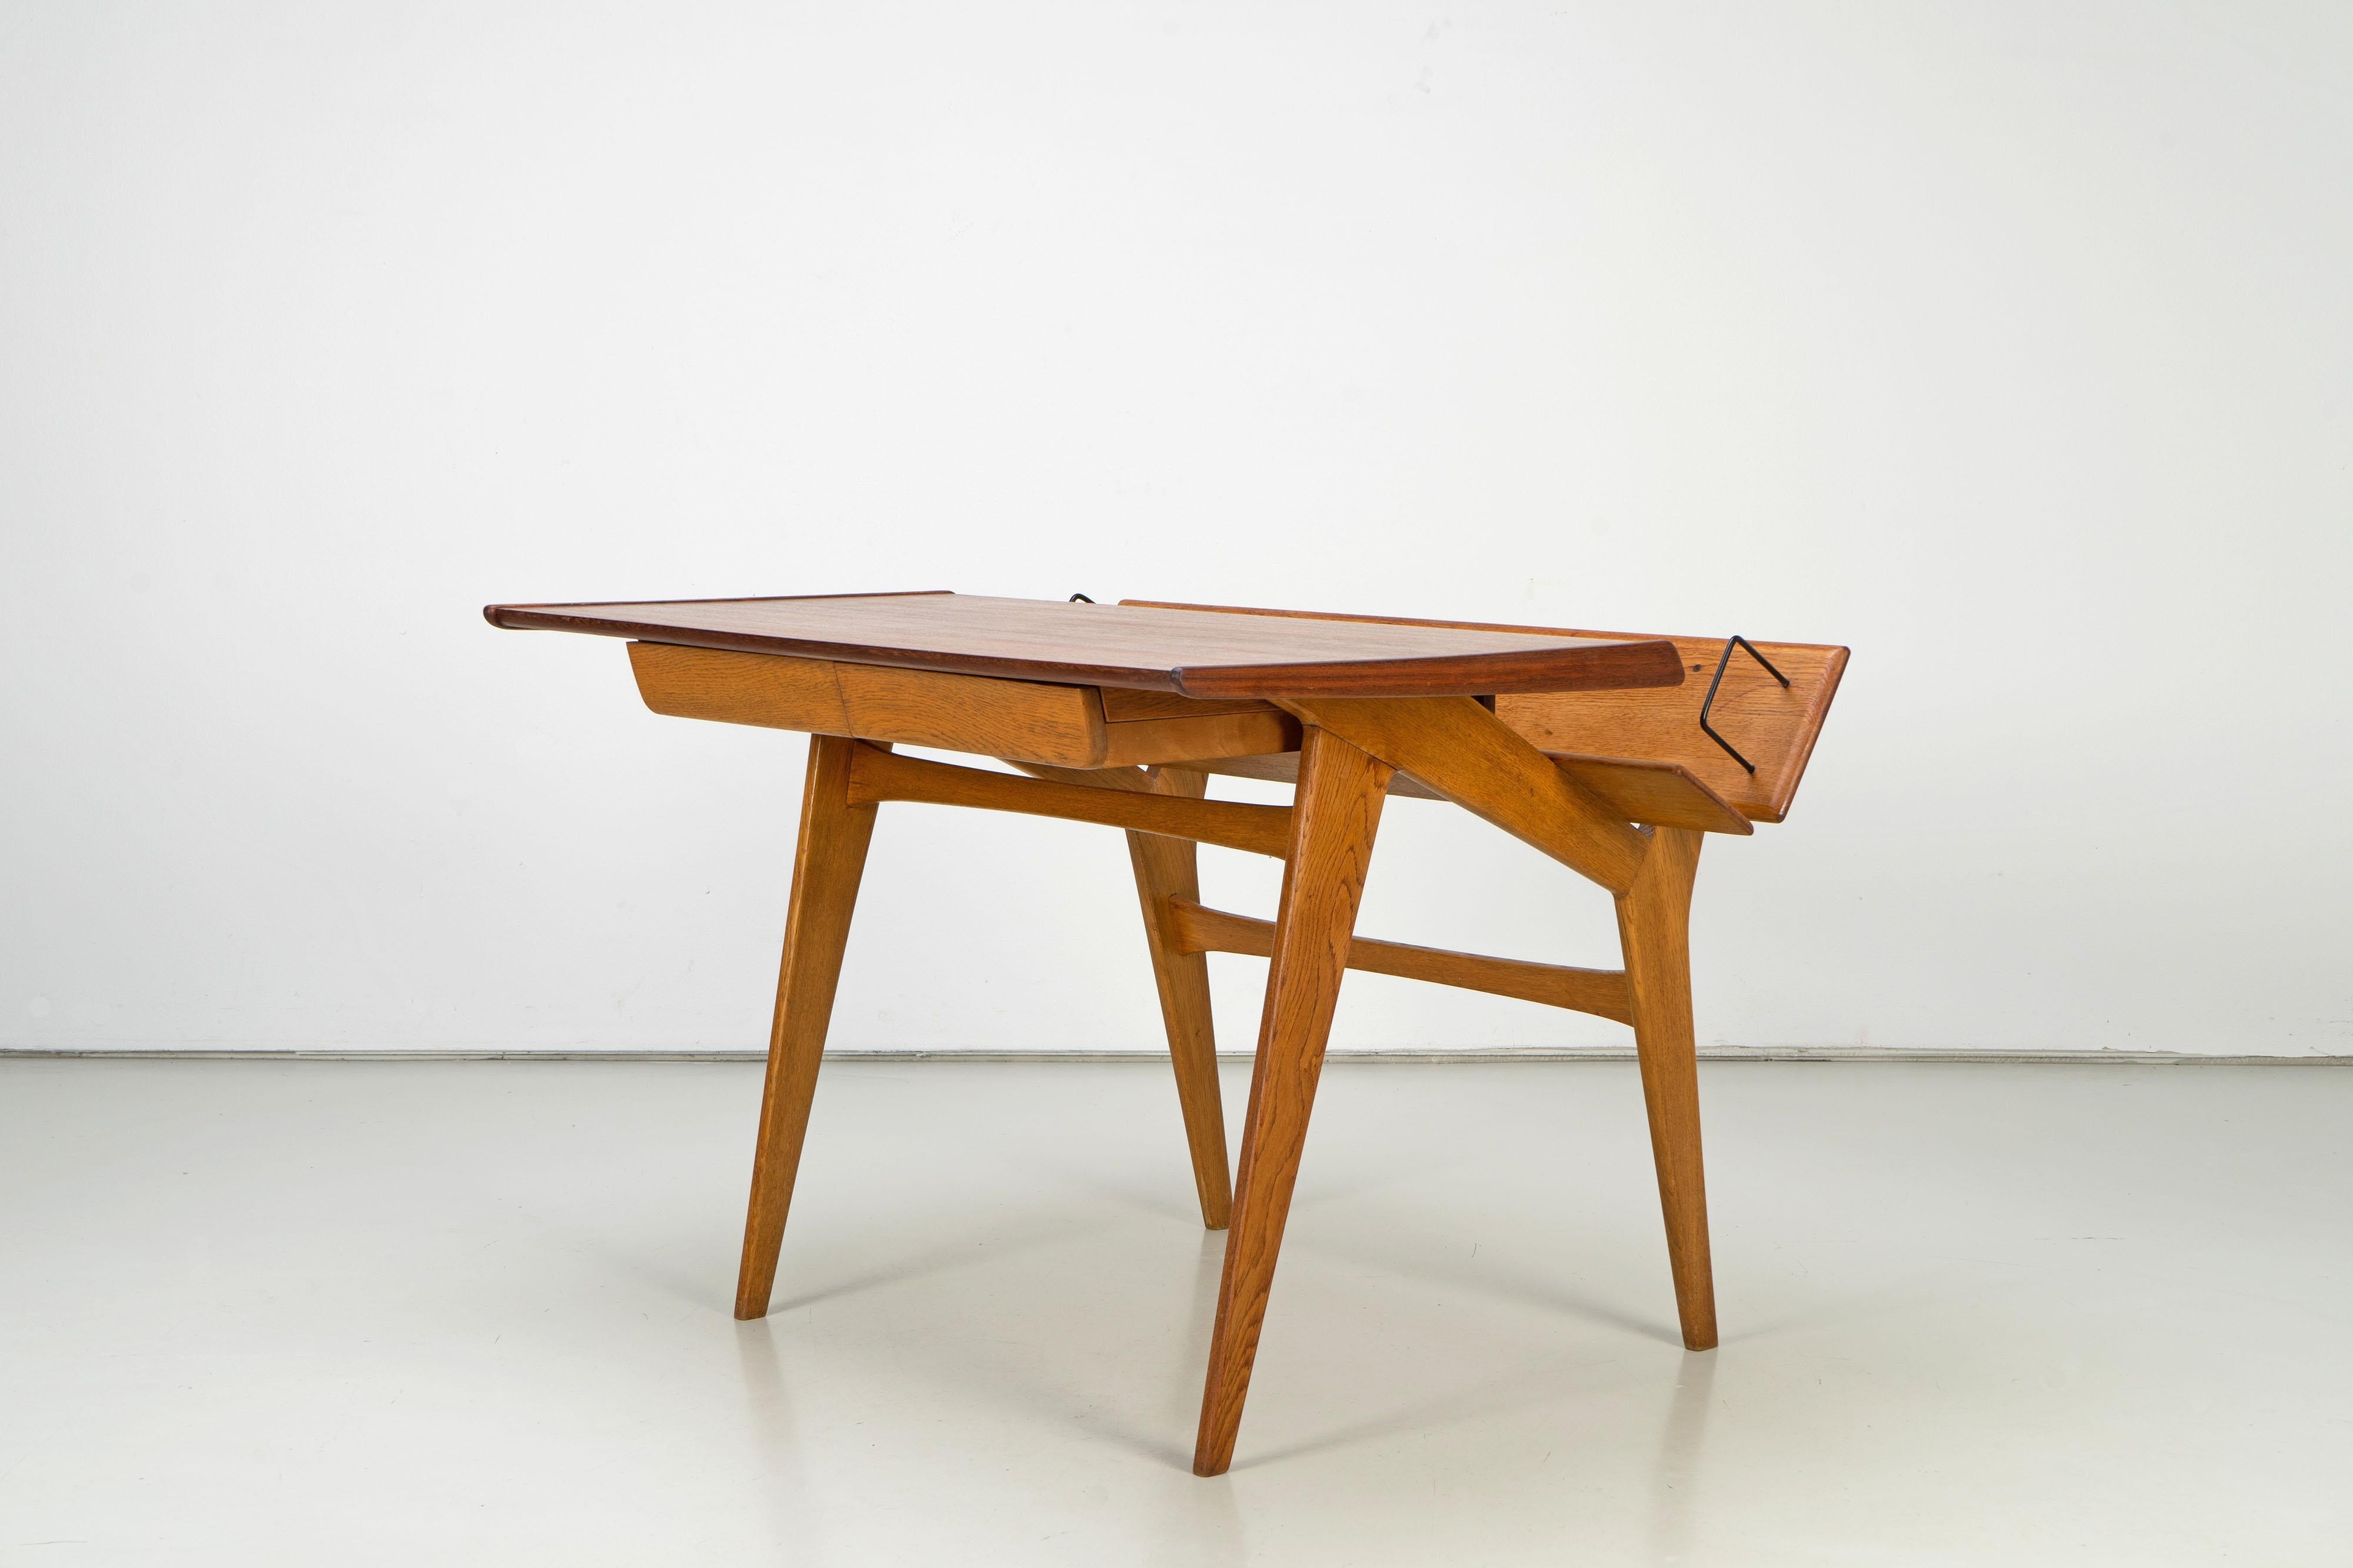 20th Century Mid-Century Modern Desk from Teak and Oak, 1950s